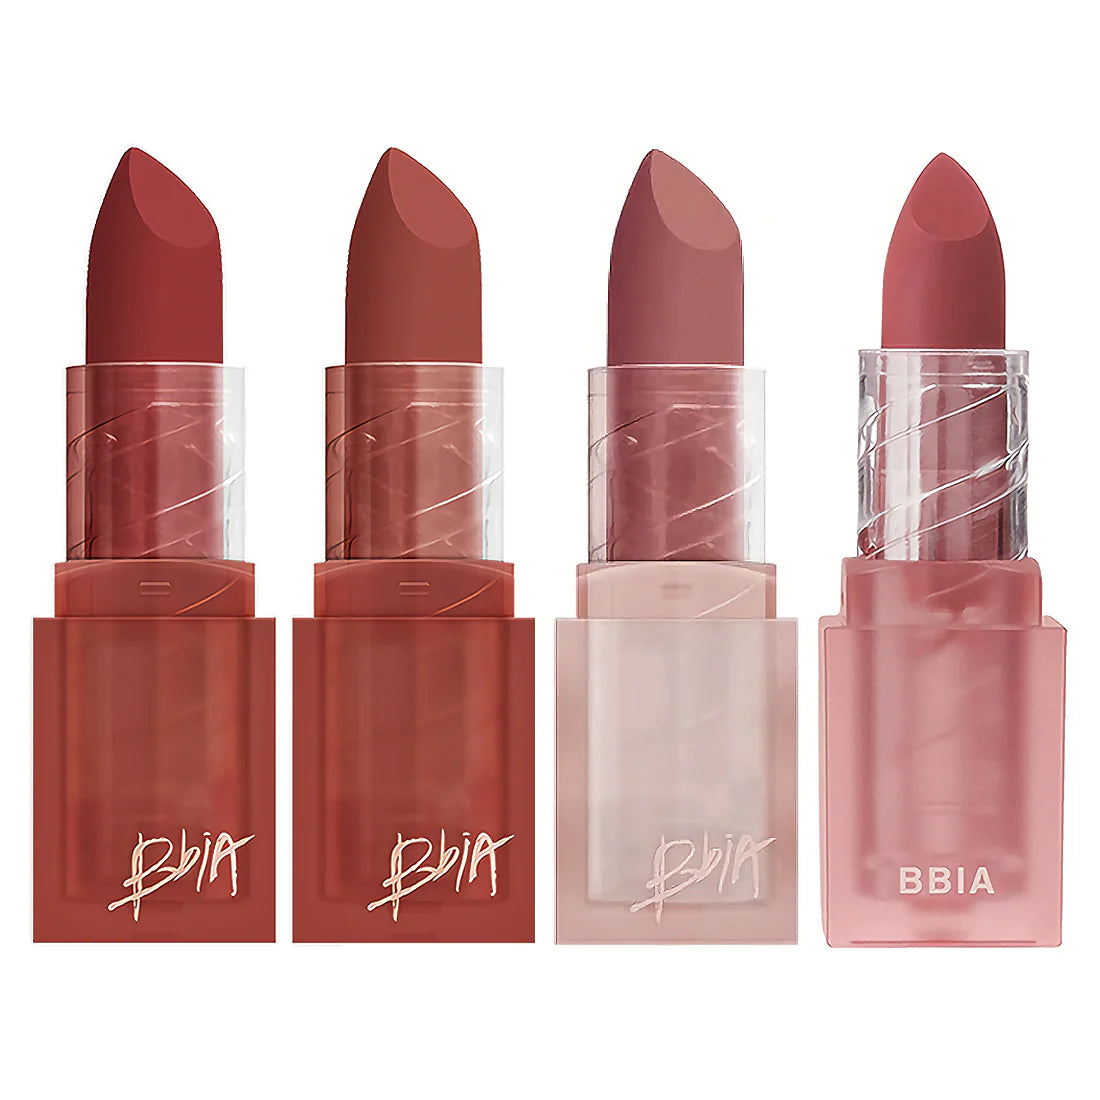 BBIA - Last Powder Lipstick